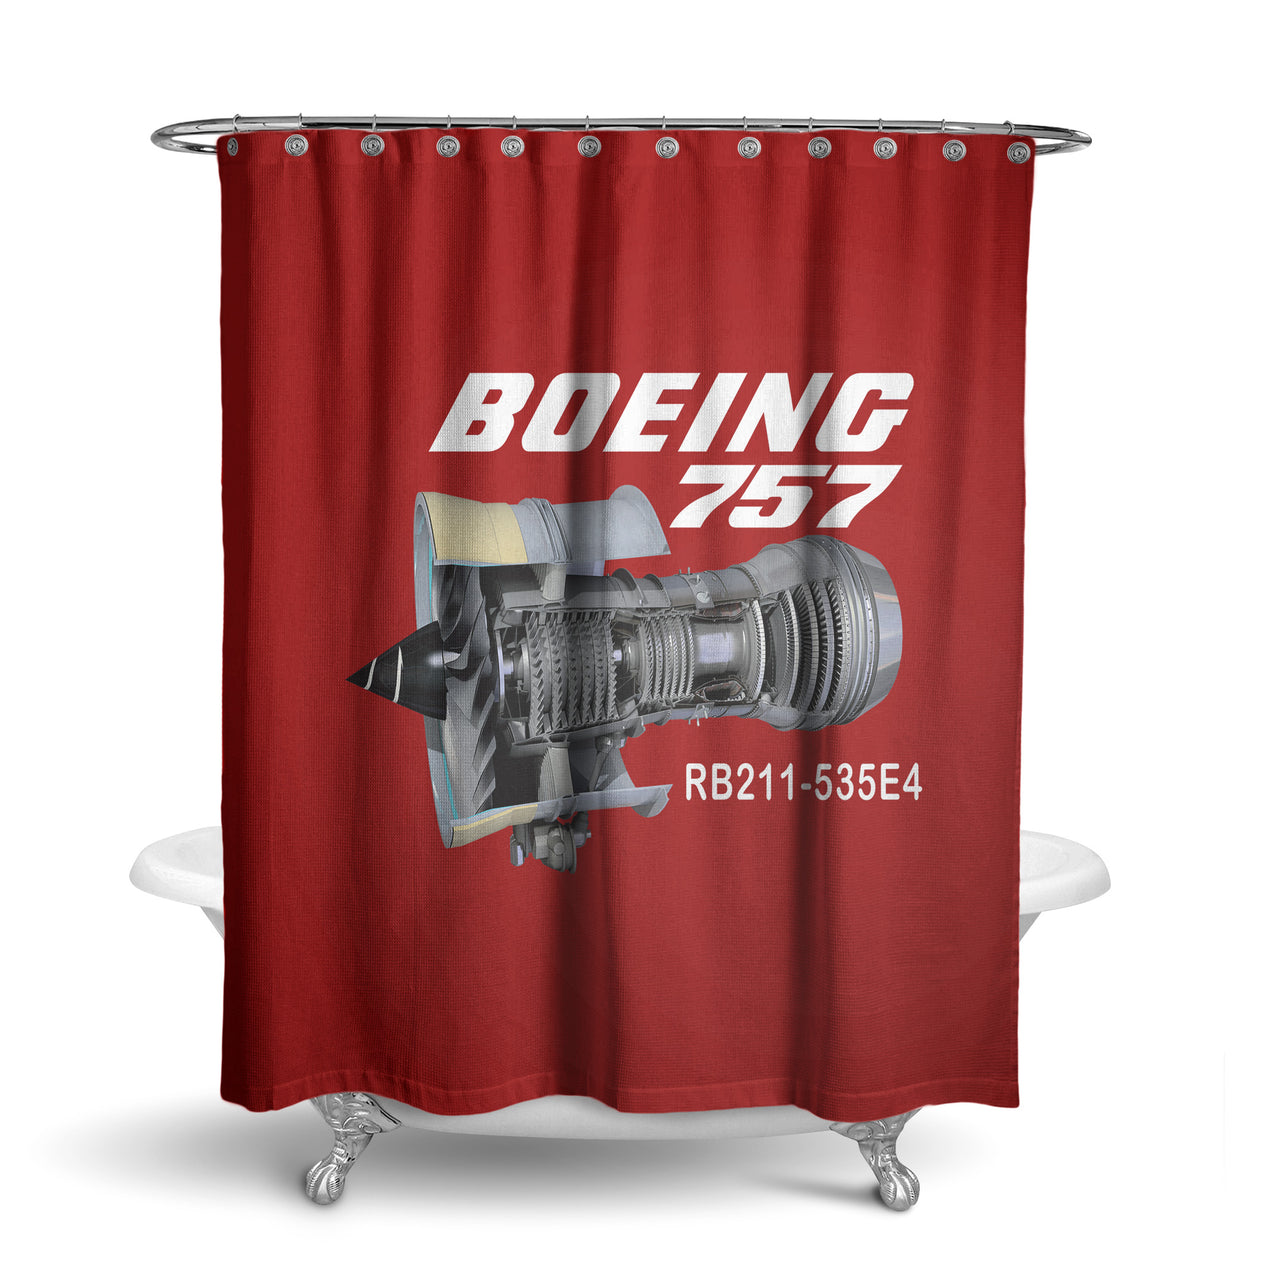 Boeing 757 & Rolls Royce Engine (RB211) Designed Shower Curtains